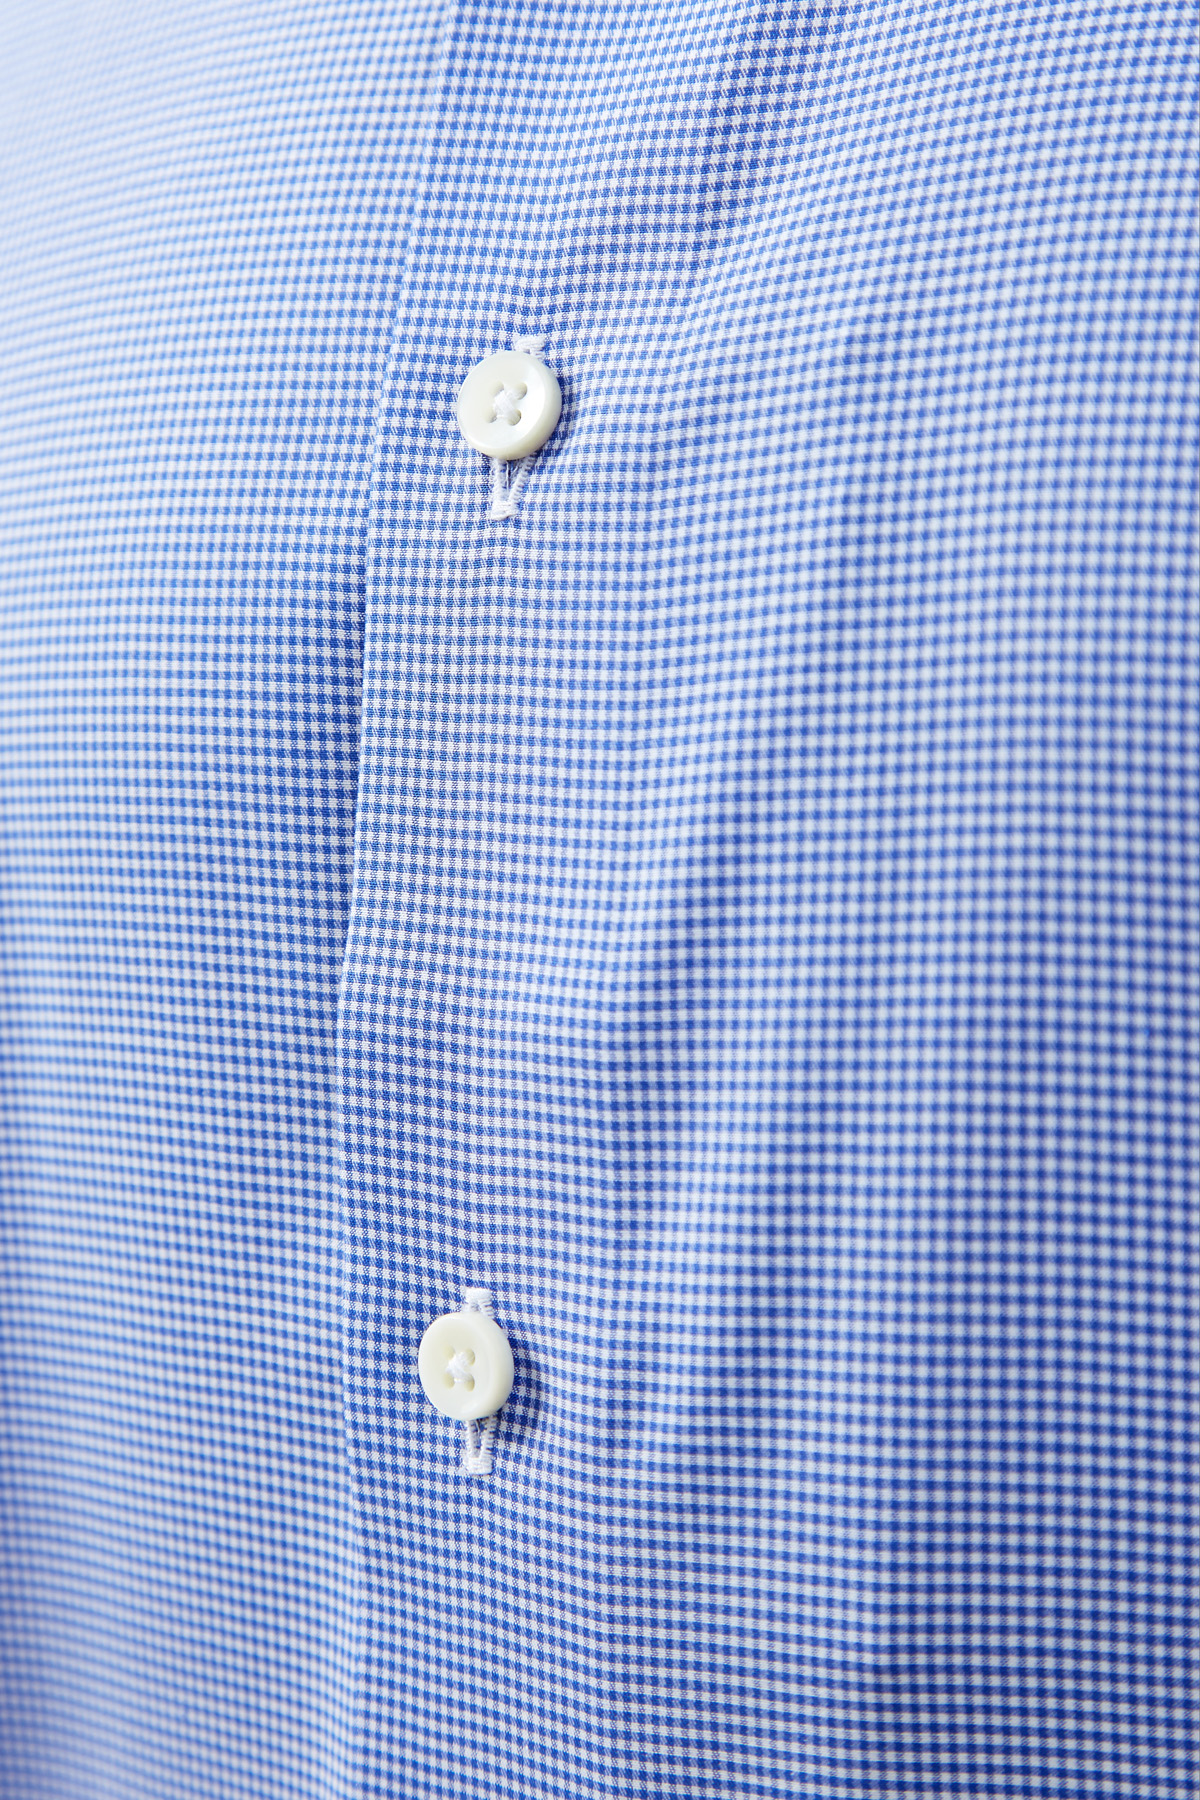 Рубашка с микро-принтом в клетку виши из хлопка Impeccabile CANALI, цвет синий, размер 58;60 - фото 5